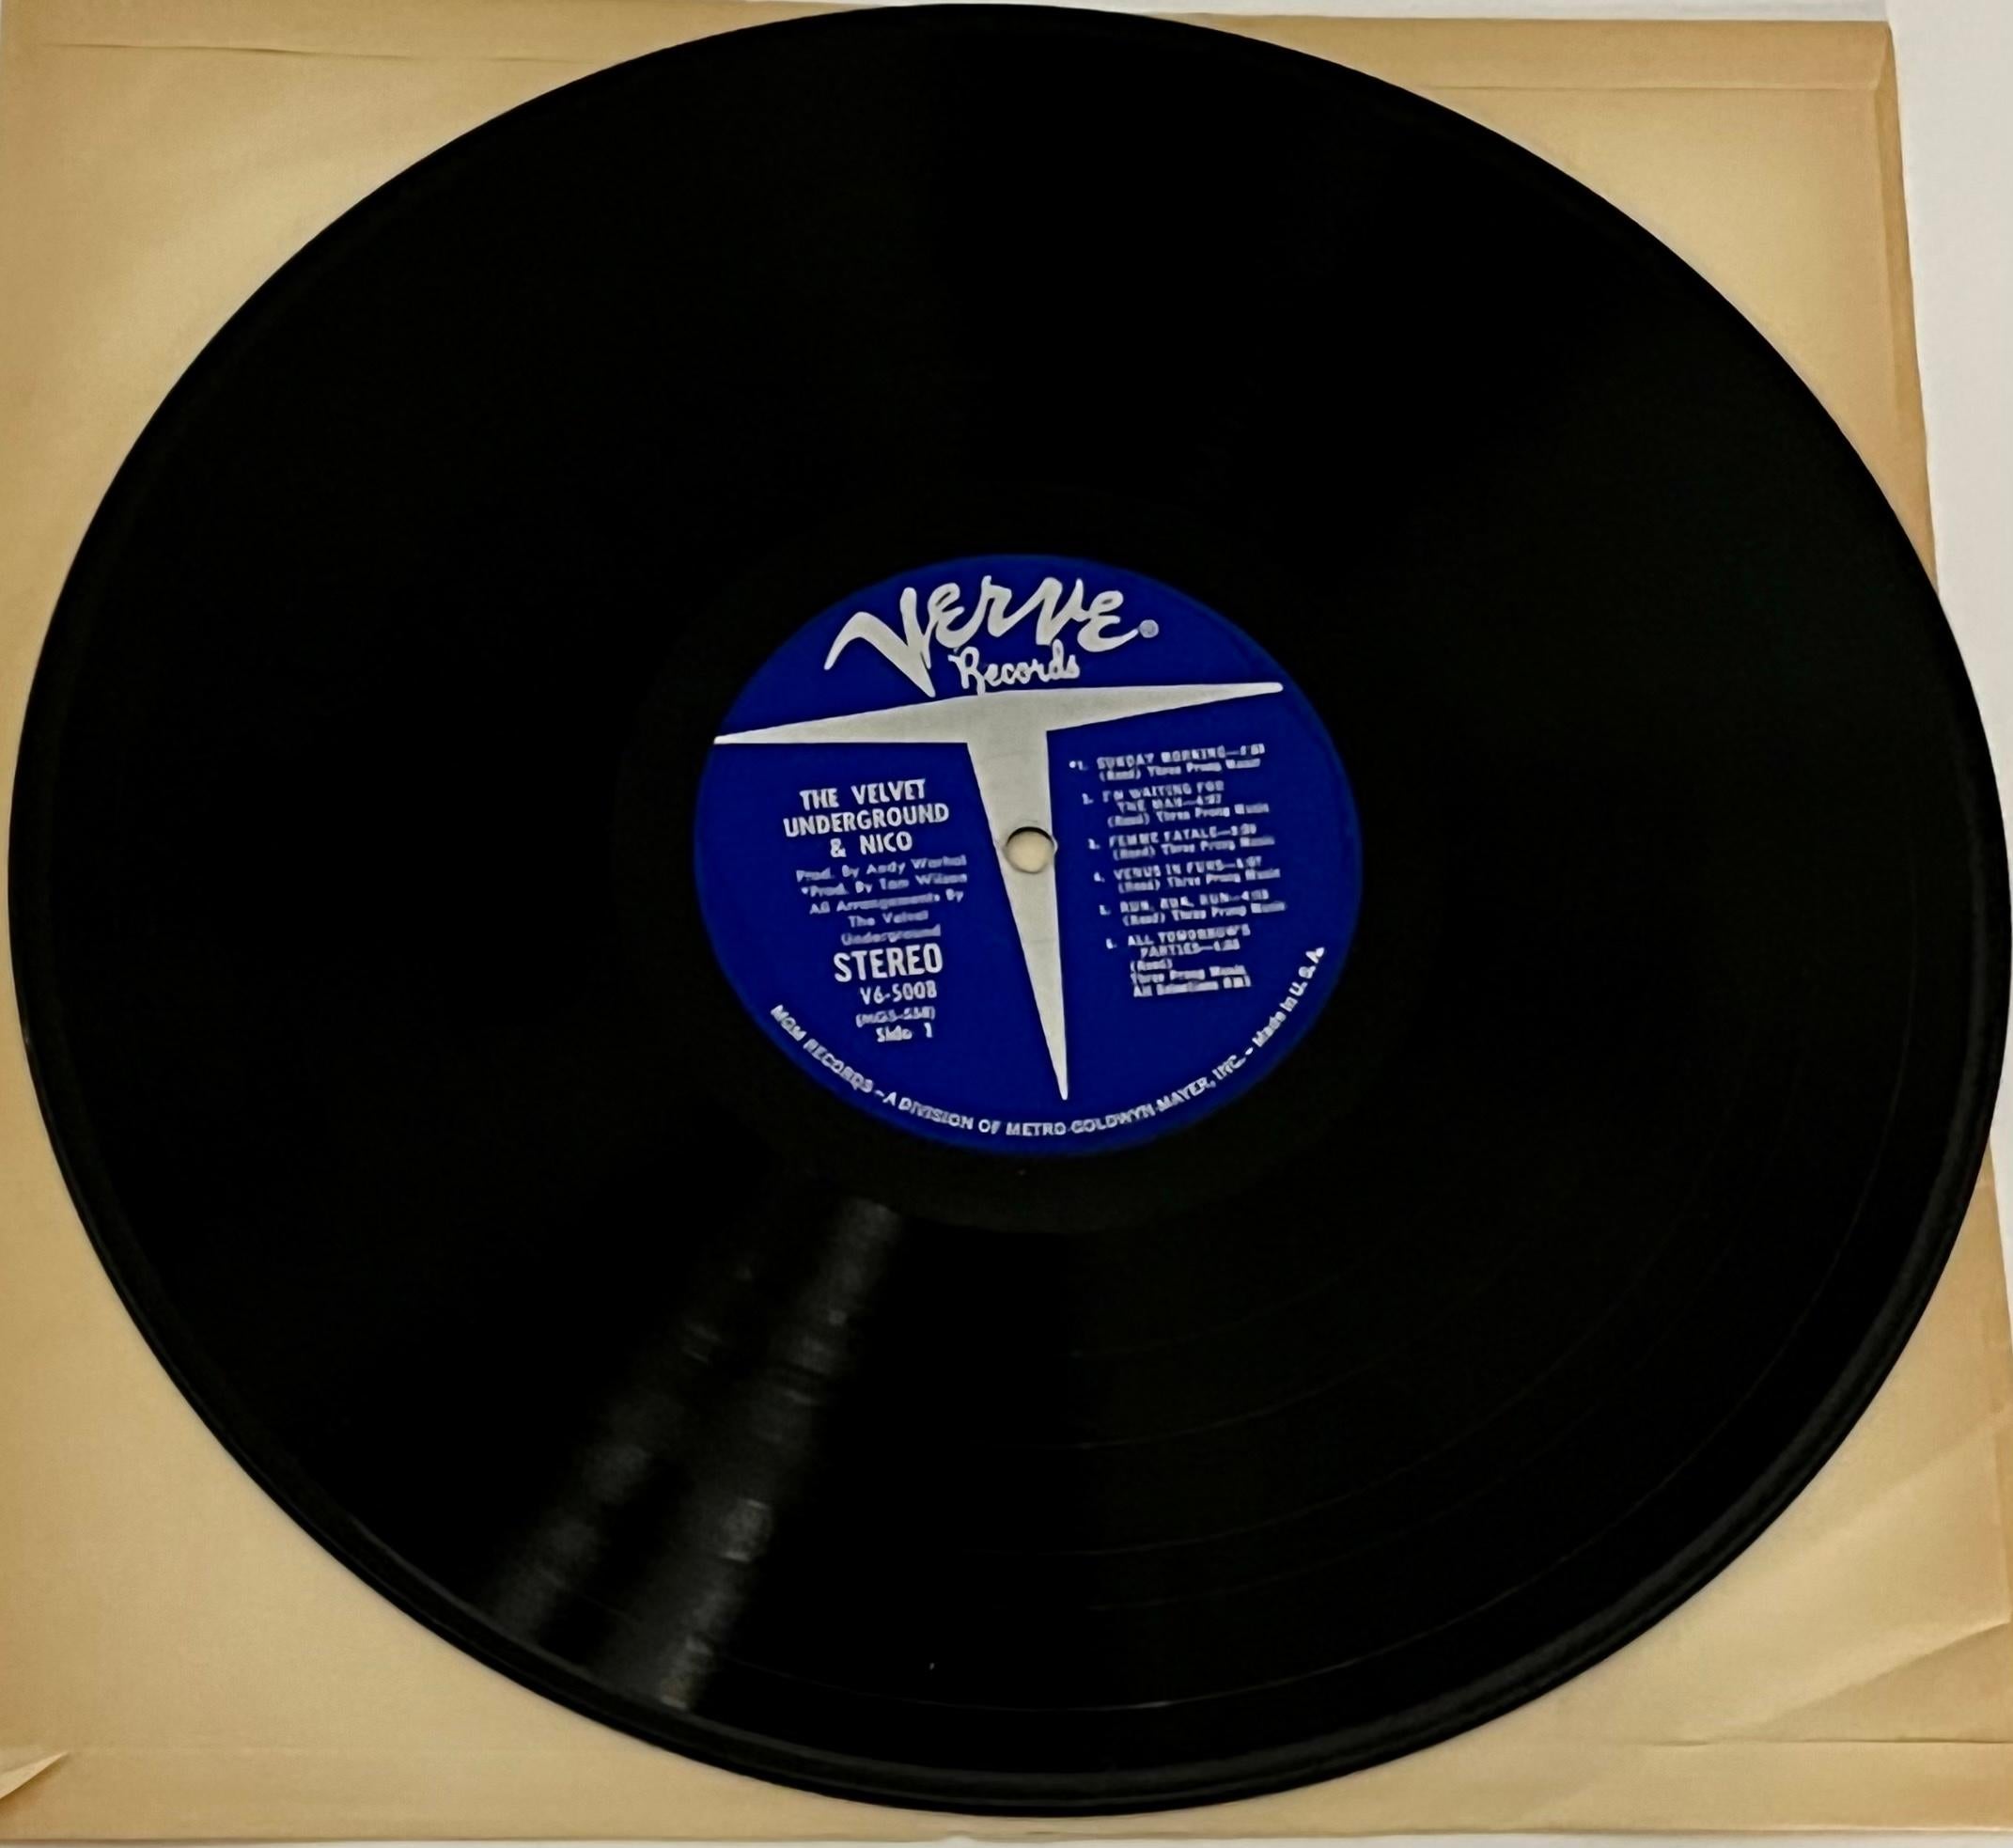 Andy Warhol Banana: Nico & The Velvet Underground vinyl record (1967 original)  2